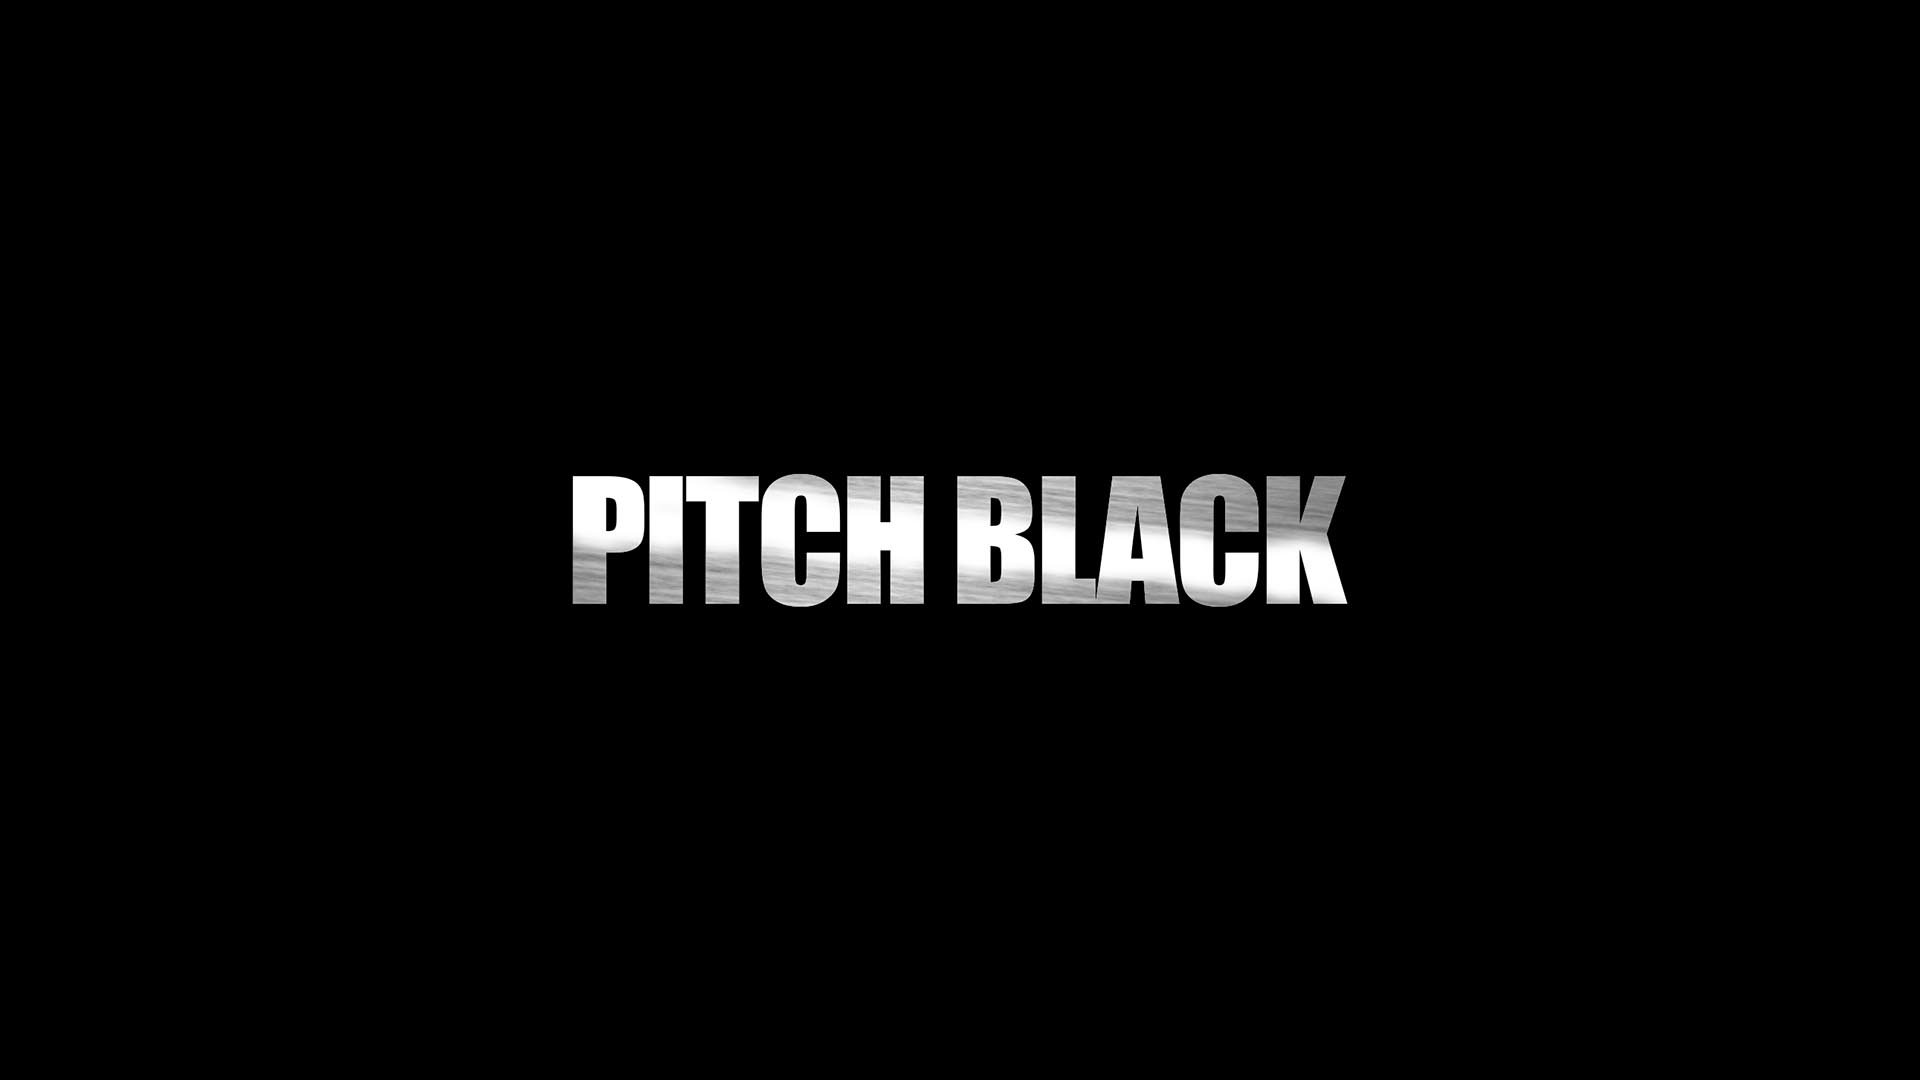 Free Pitch Black high quality wallpaper ID:81611 for full hd desktop